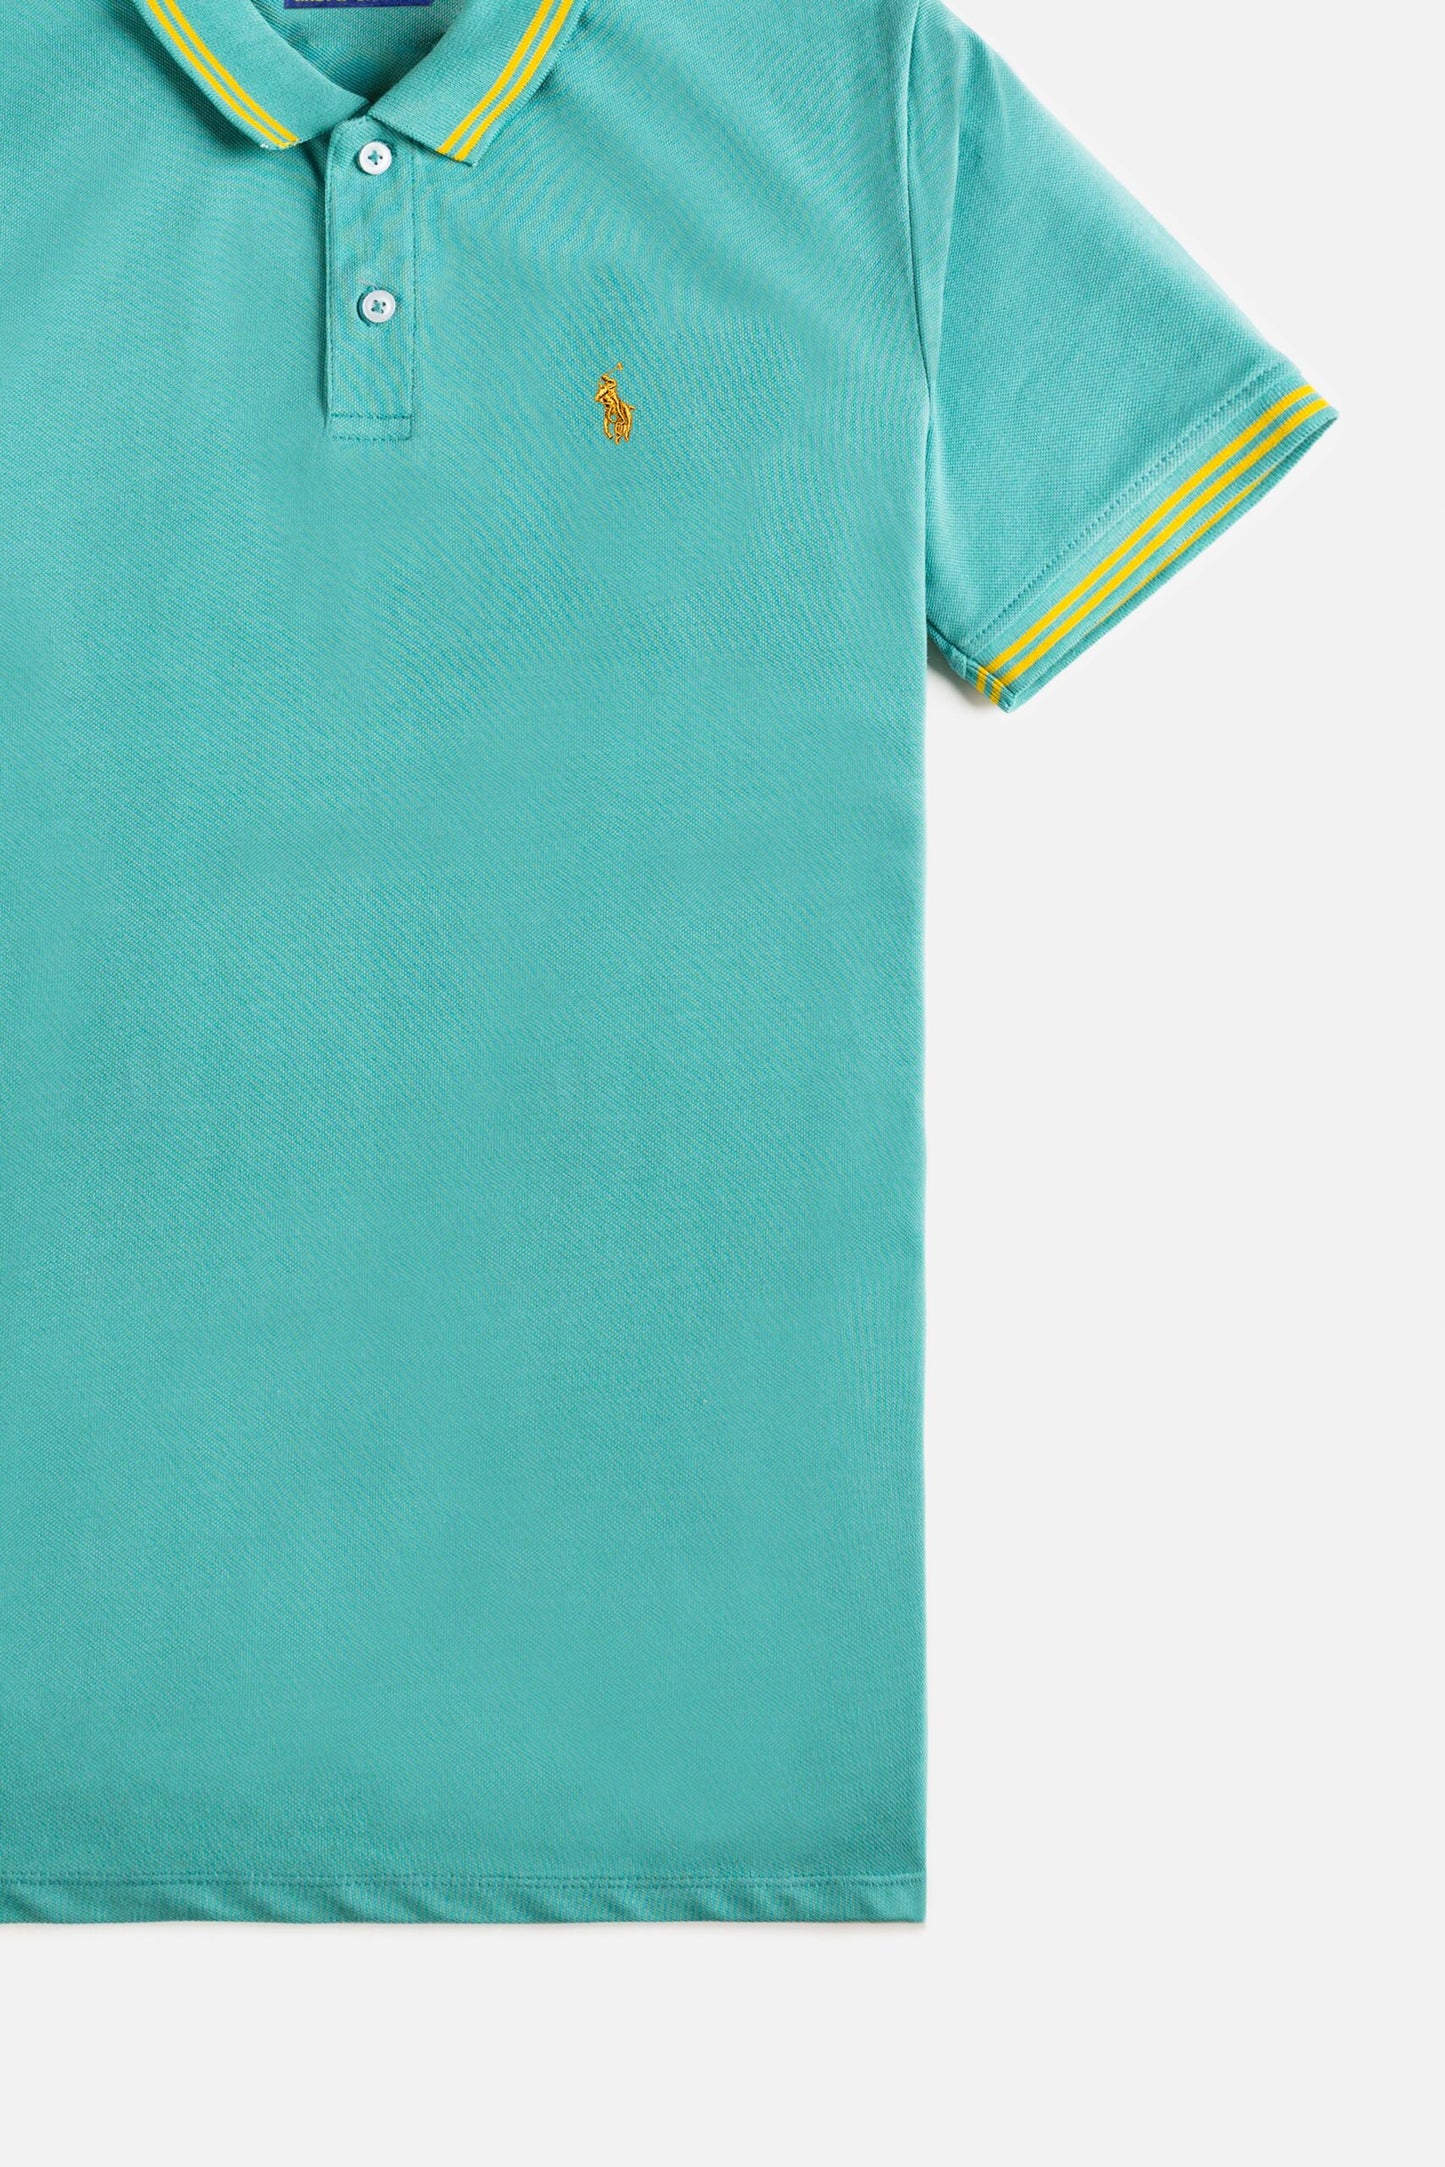 RL Premium Tipping Polo Shirt – Turquoise